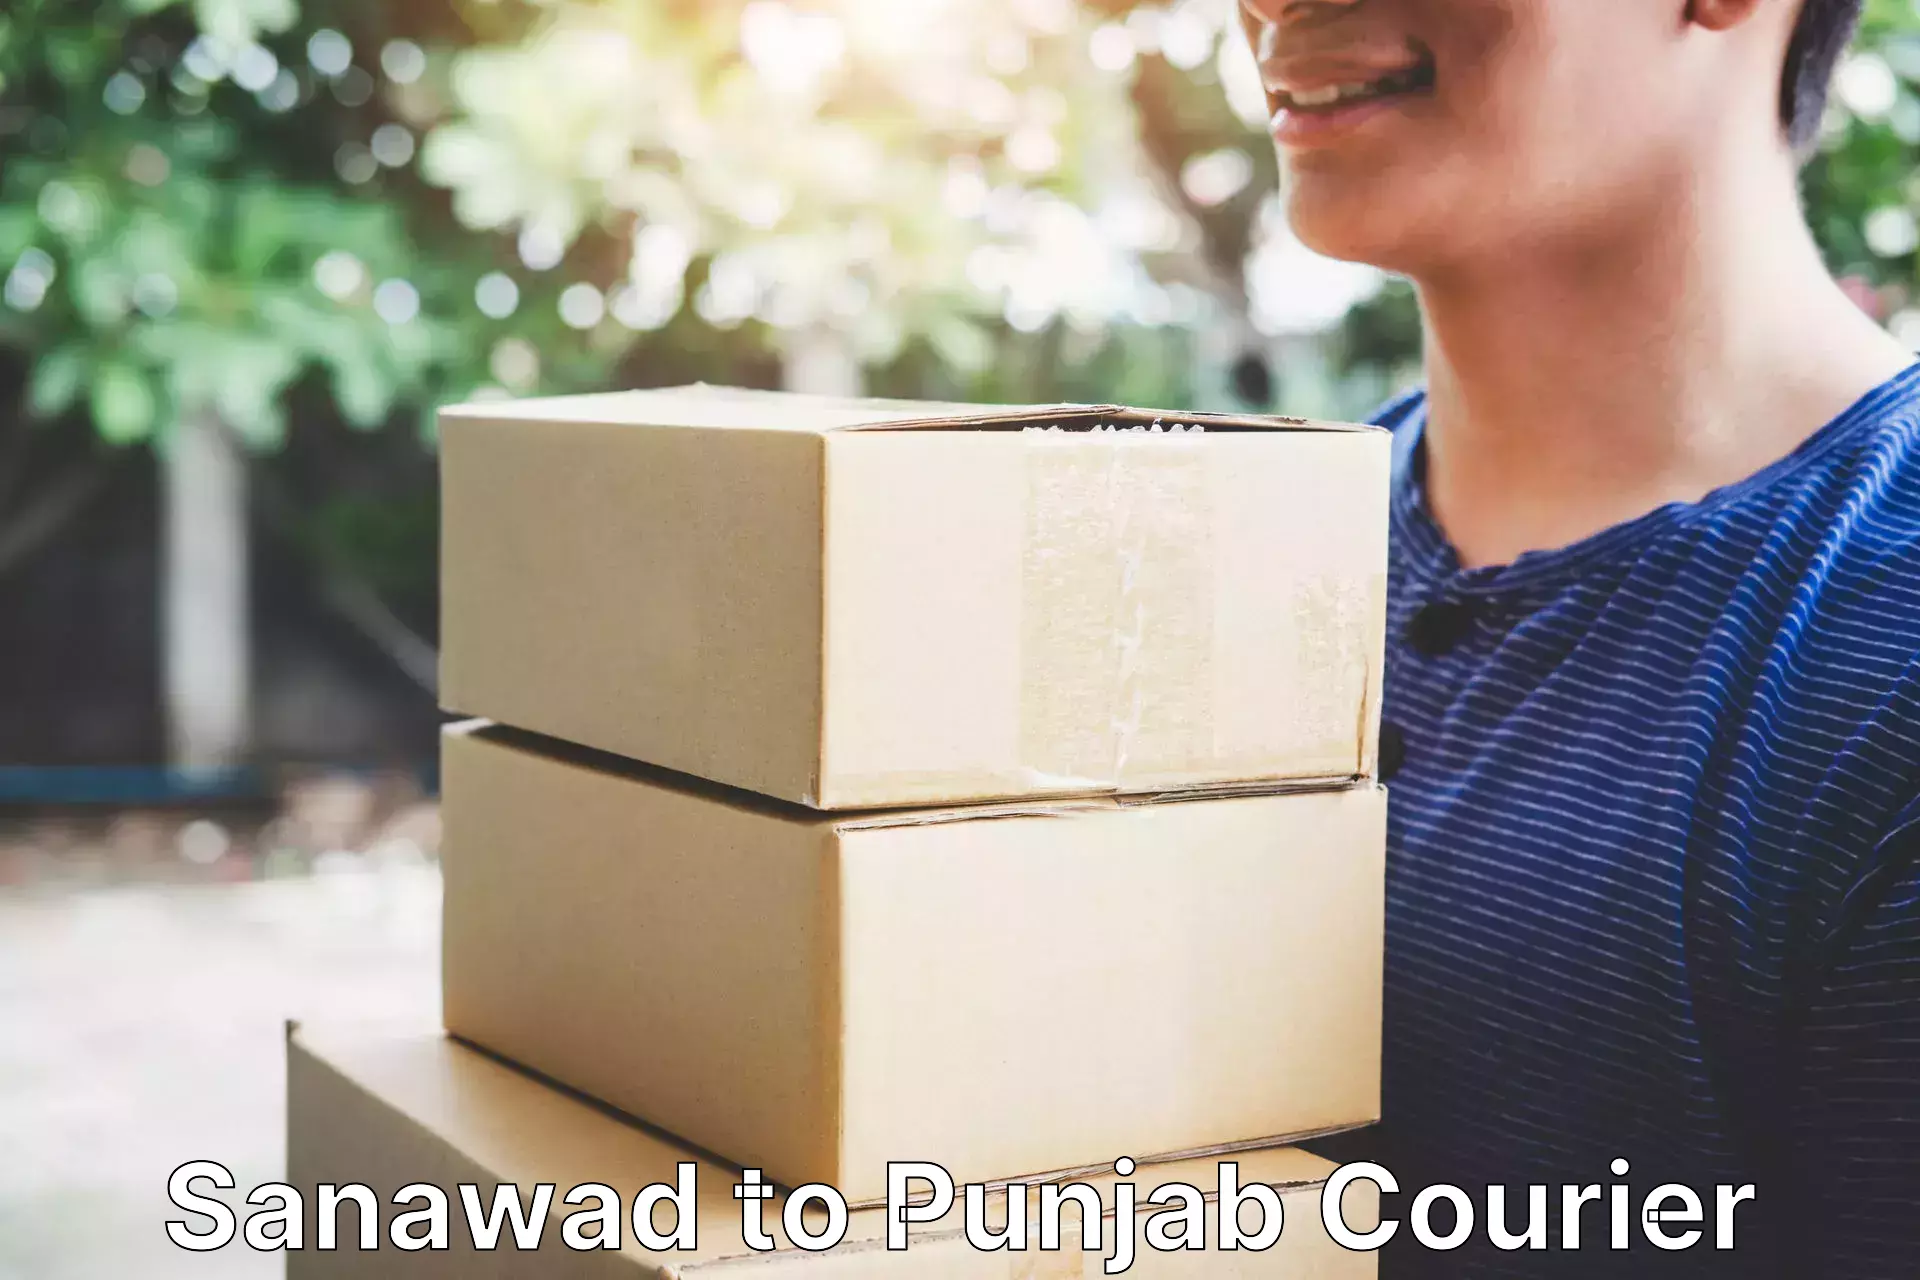 Luggage transport company Sanawad to Punjab